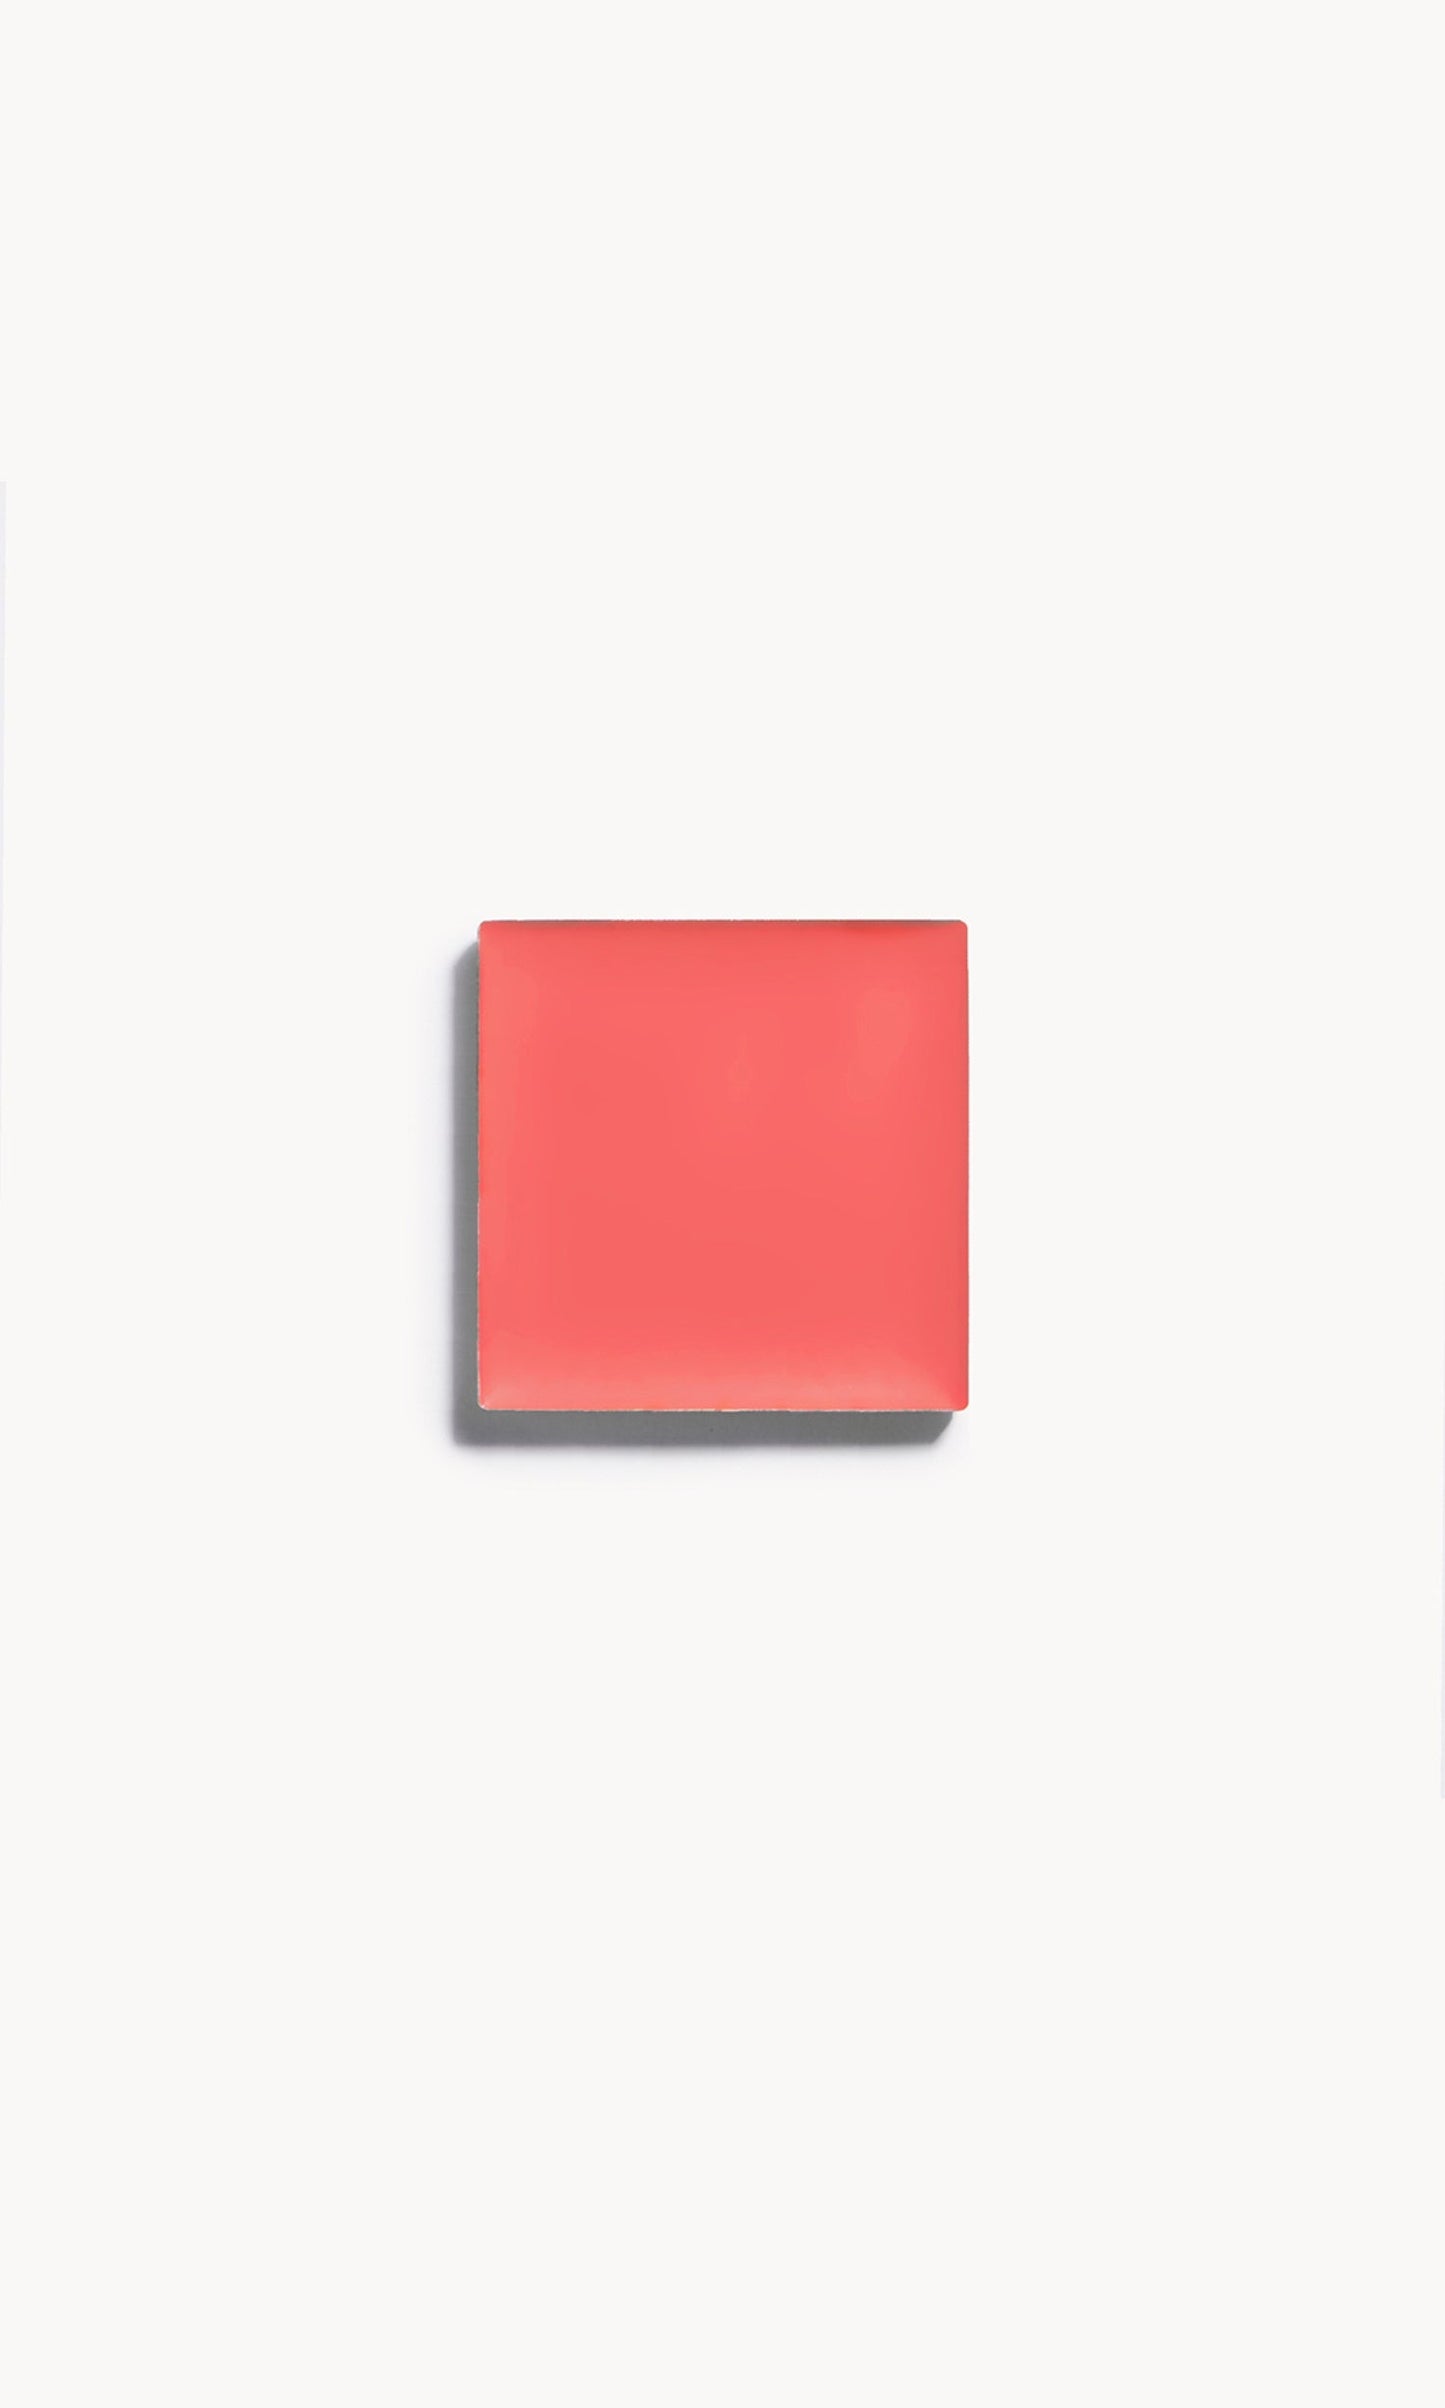 A square of bright coral cream blush on a white background